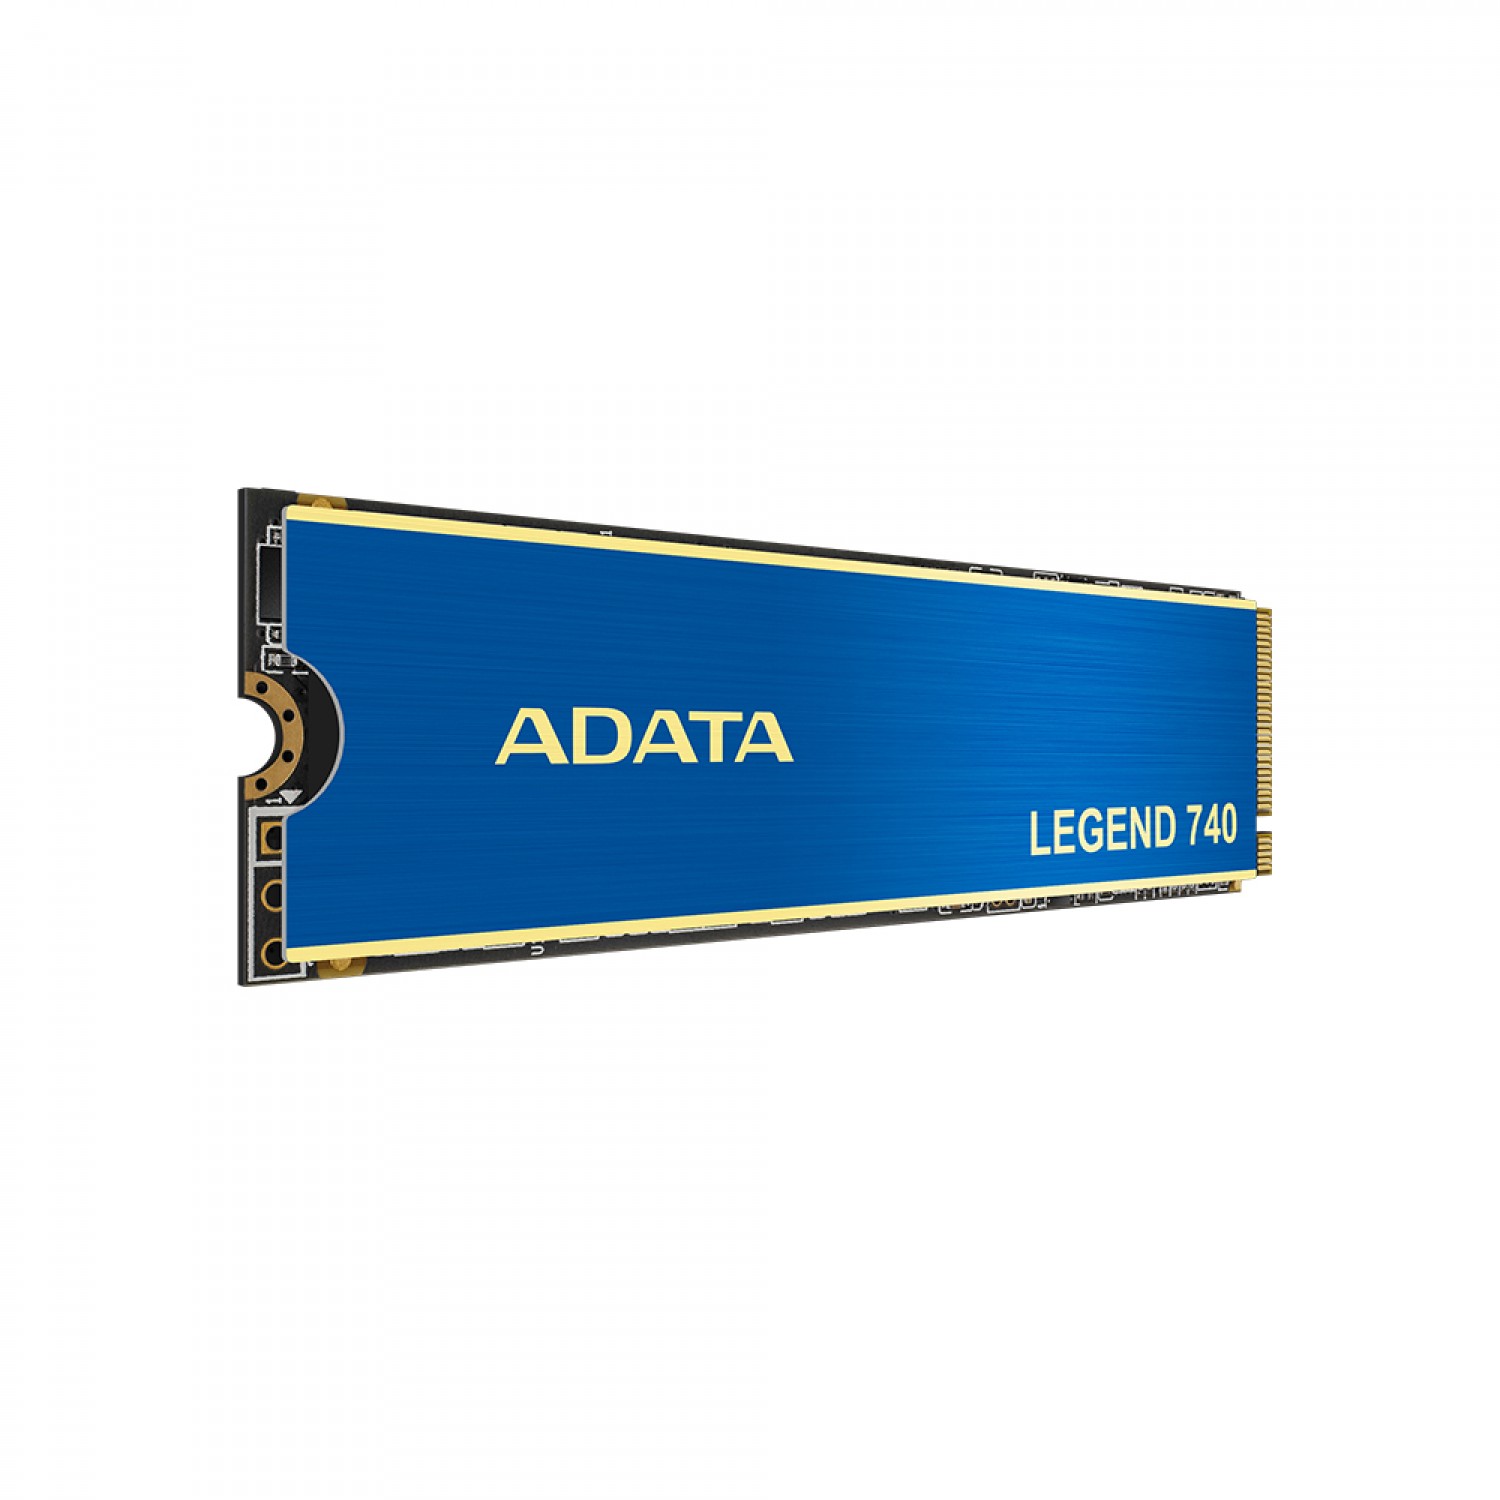 حافظه اس اس دی ADATA Legend 740 500GB-1